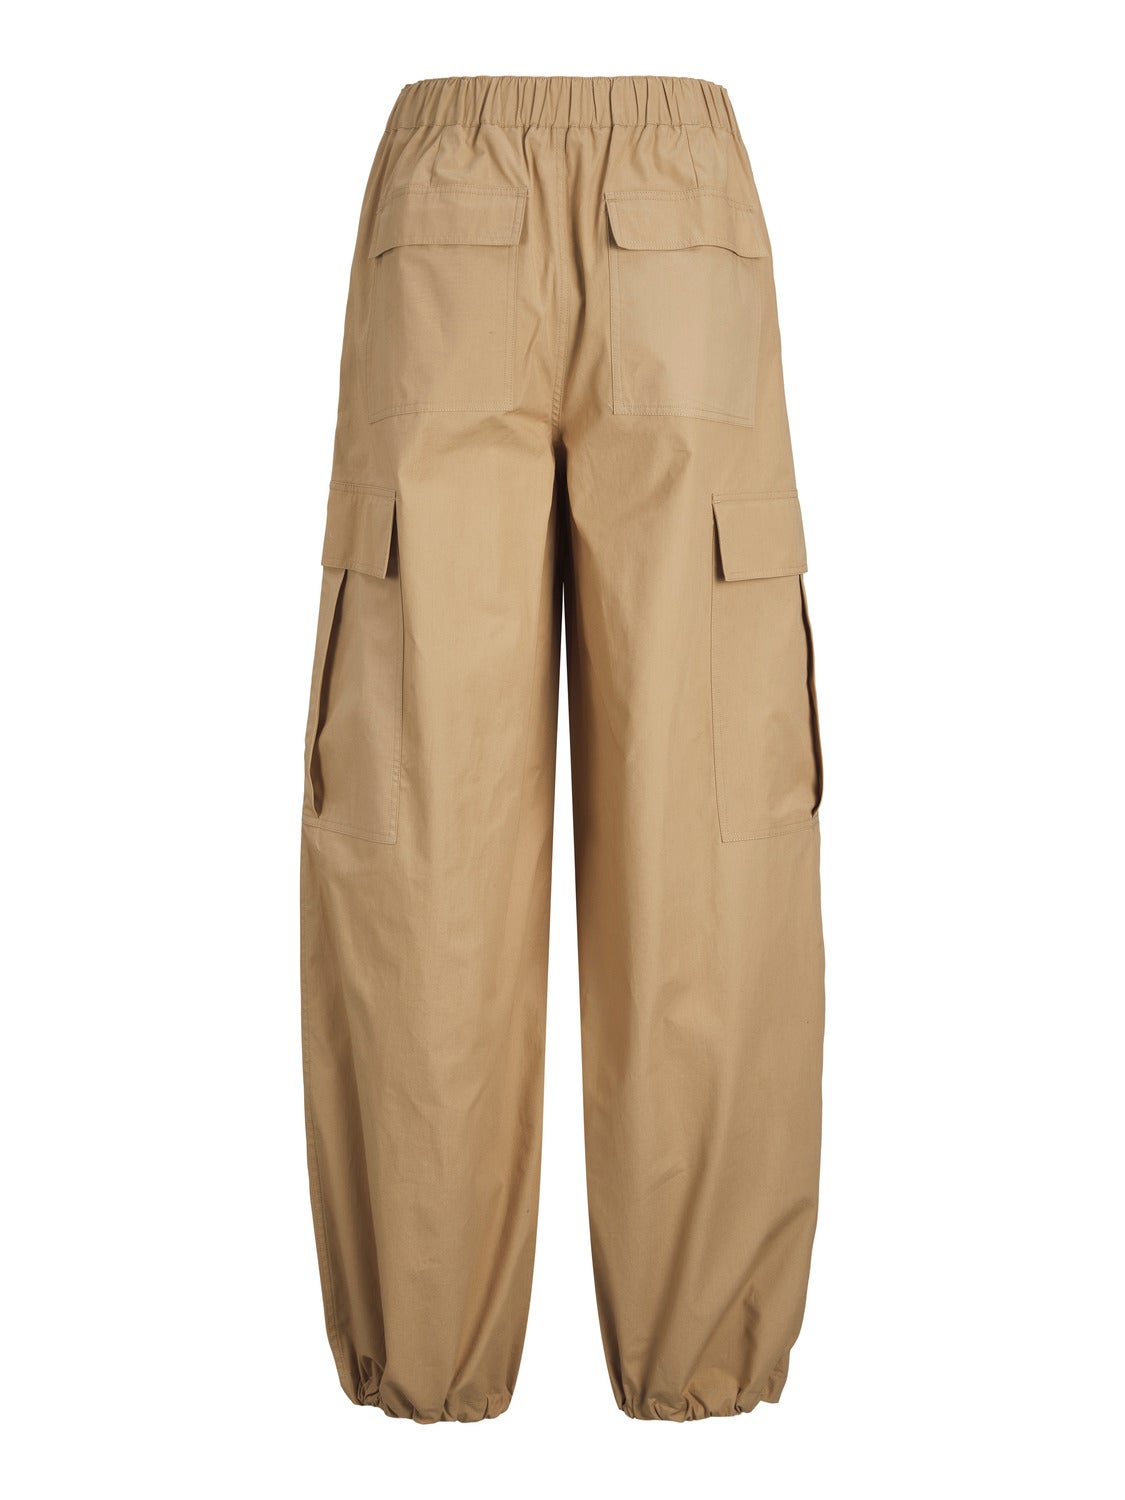 DK KHAKI 3 SLIM FIT CARGO PANT By Rookies Jeans | Slim fit cargo pants, Mens  outfits, Men fashion casual shirts